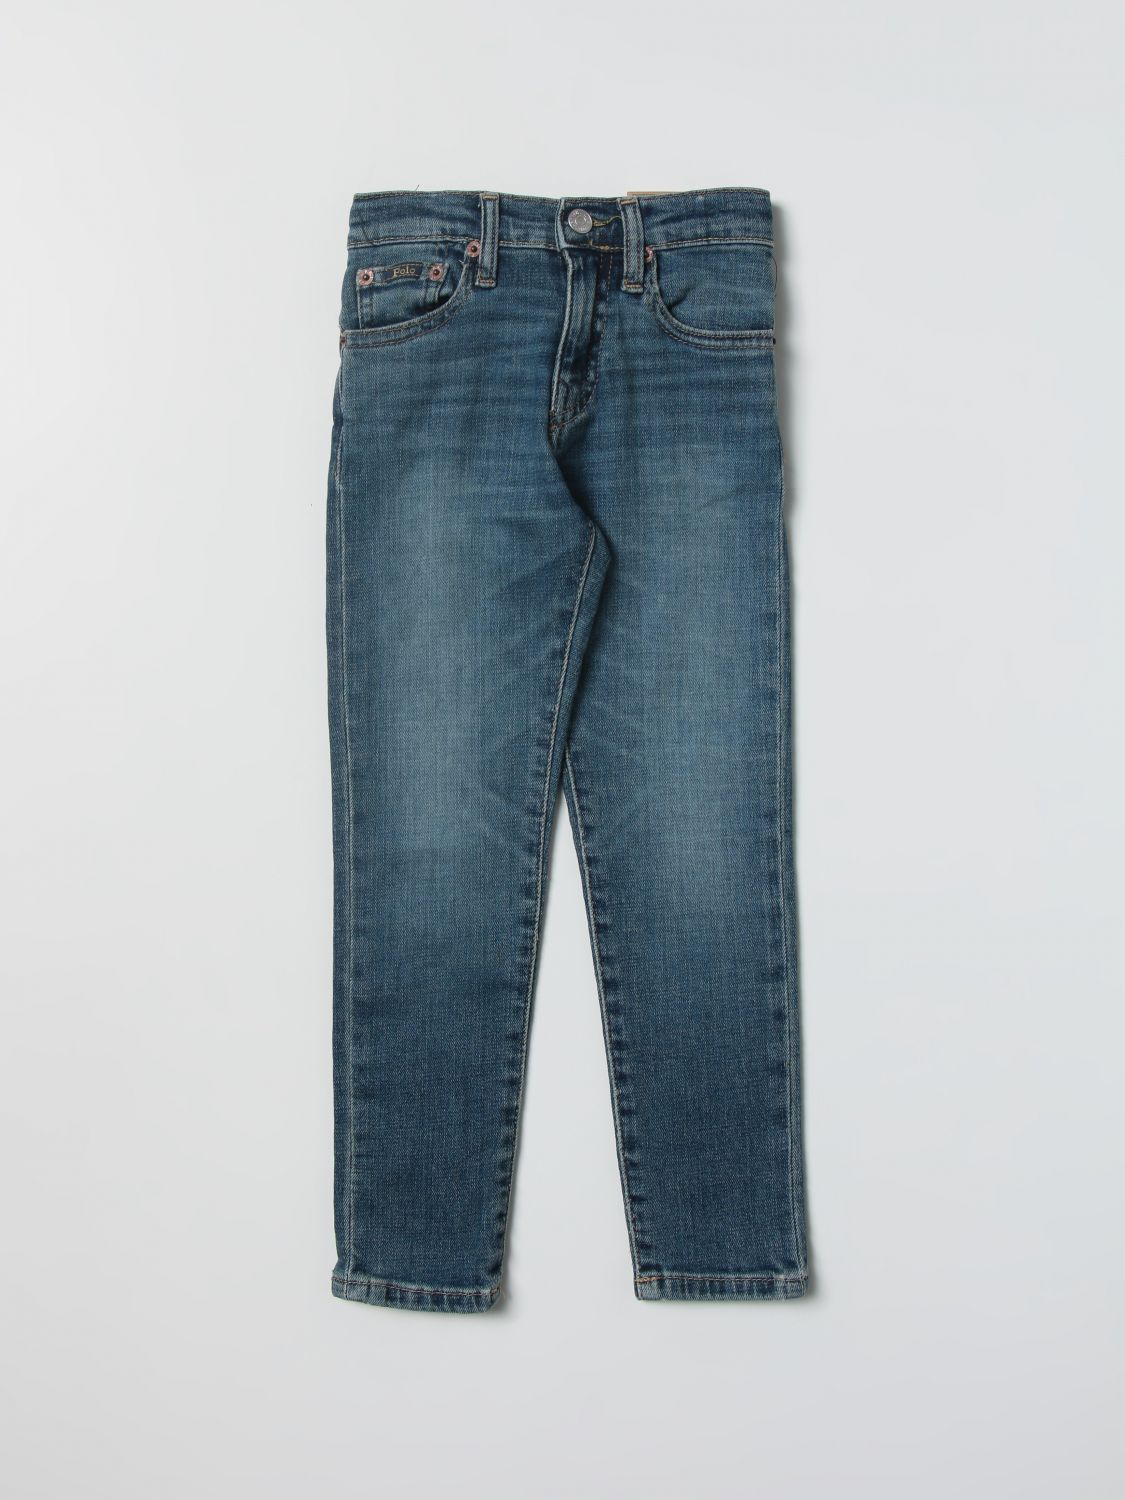 Robe Odysseus Decrease POLO RALPH LAUREN: jeans for boys - Blue | Polo Ralph Lauren jeans  321759991 online on GIGLIO.COM